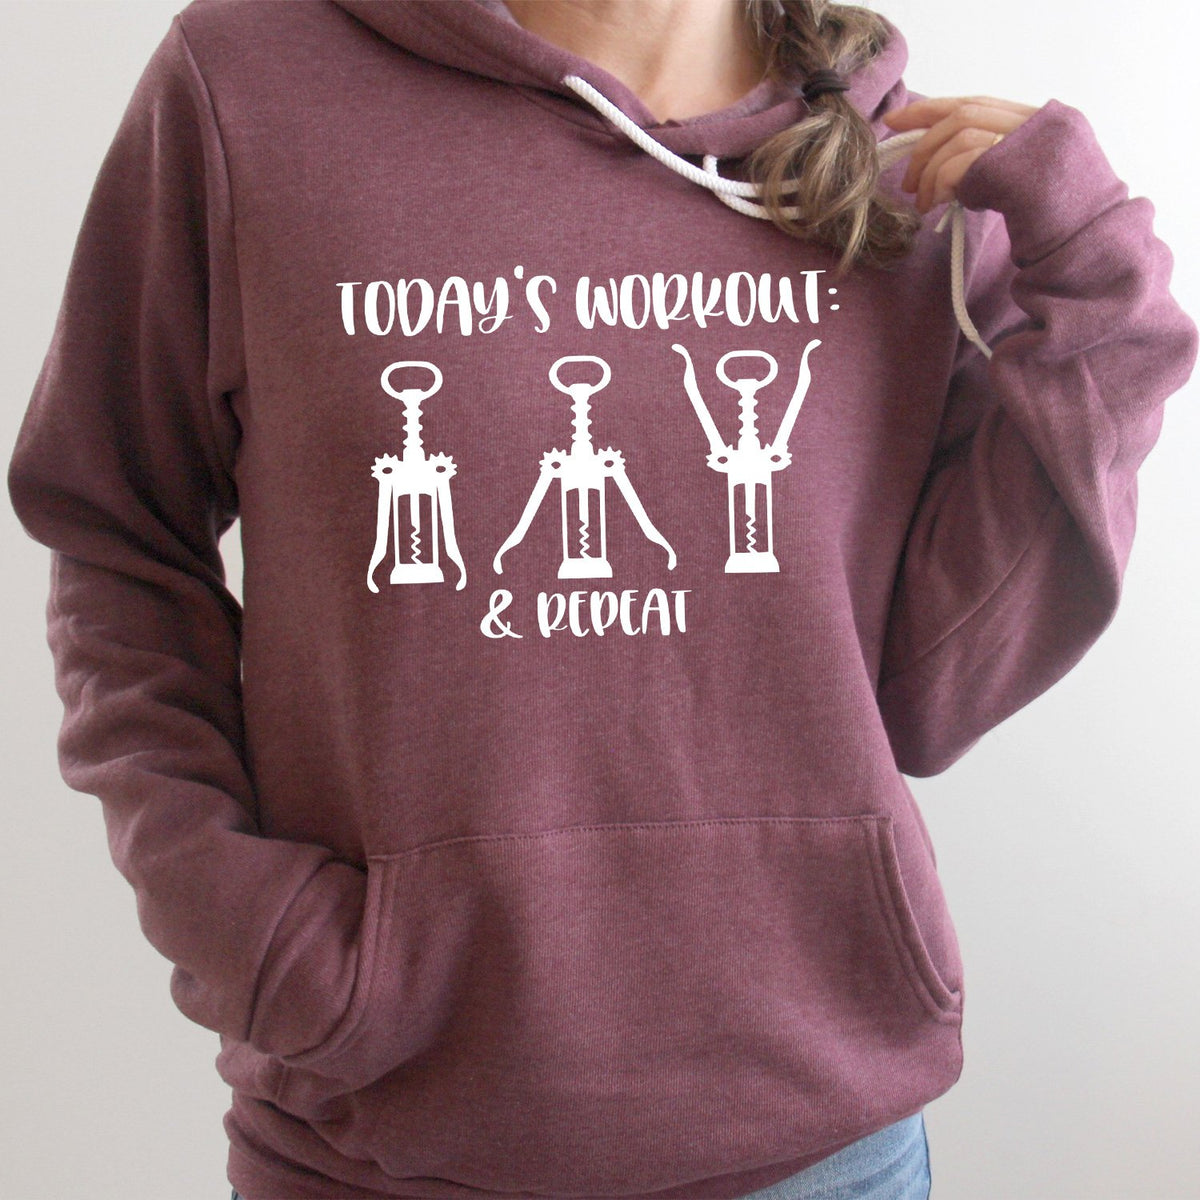 Today&#39;s Workout: Wine &amp; Repeat - Hoodie Sweatshirt